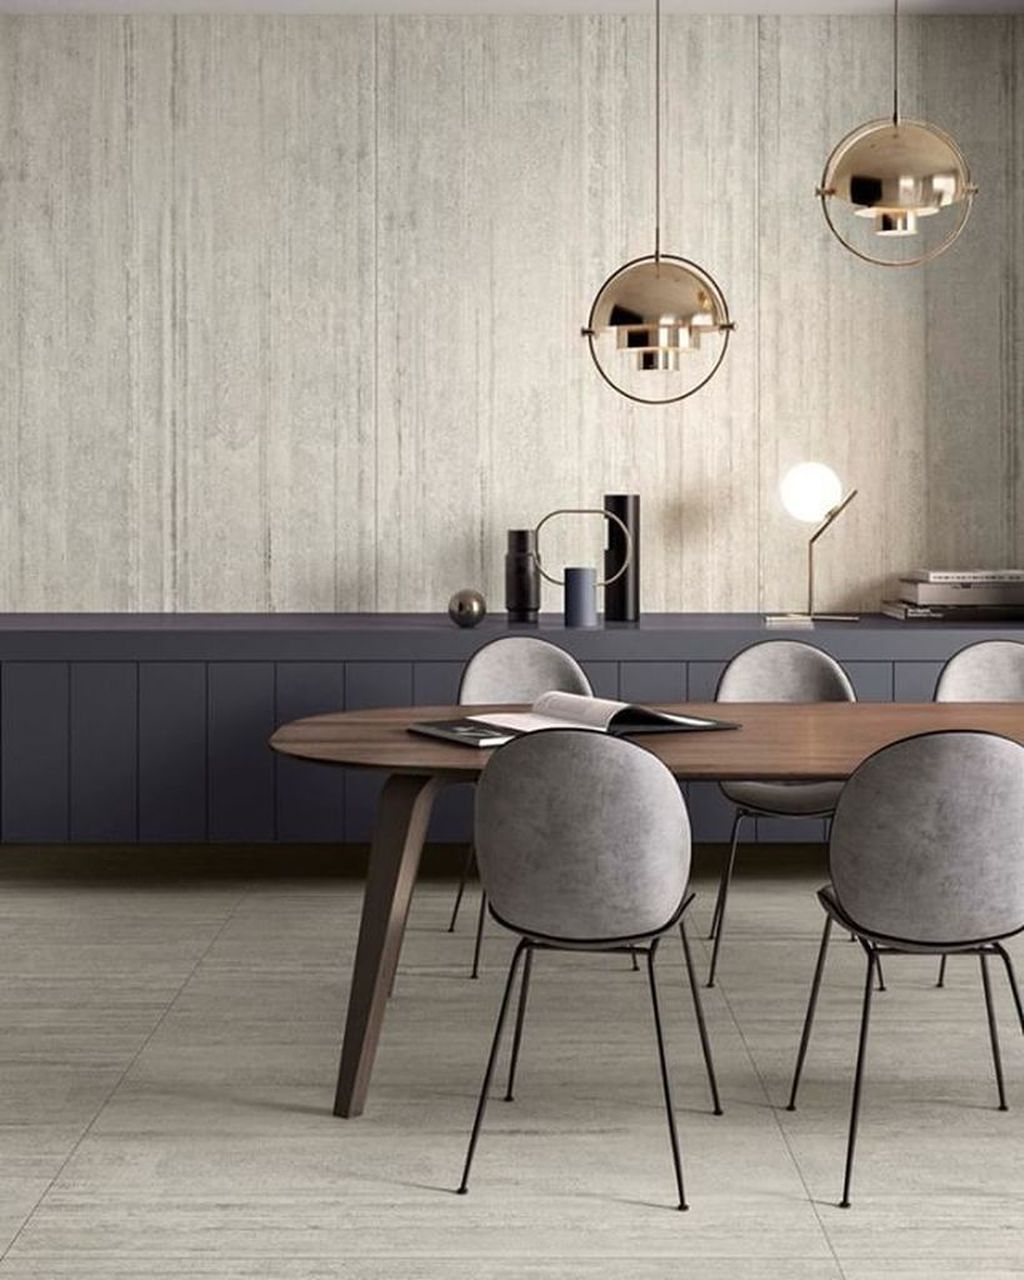 Popular Contemporary Dining Room Design Ideas 02 - HOMYHOMEE